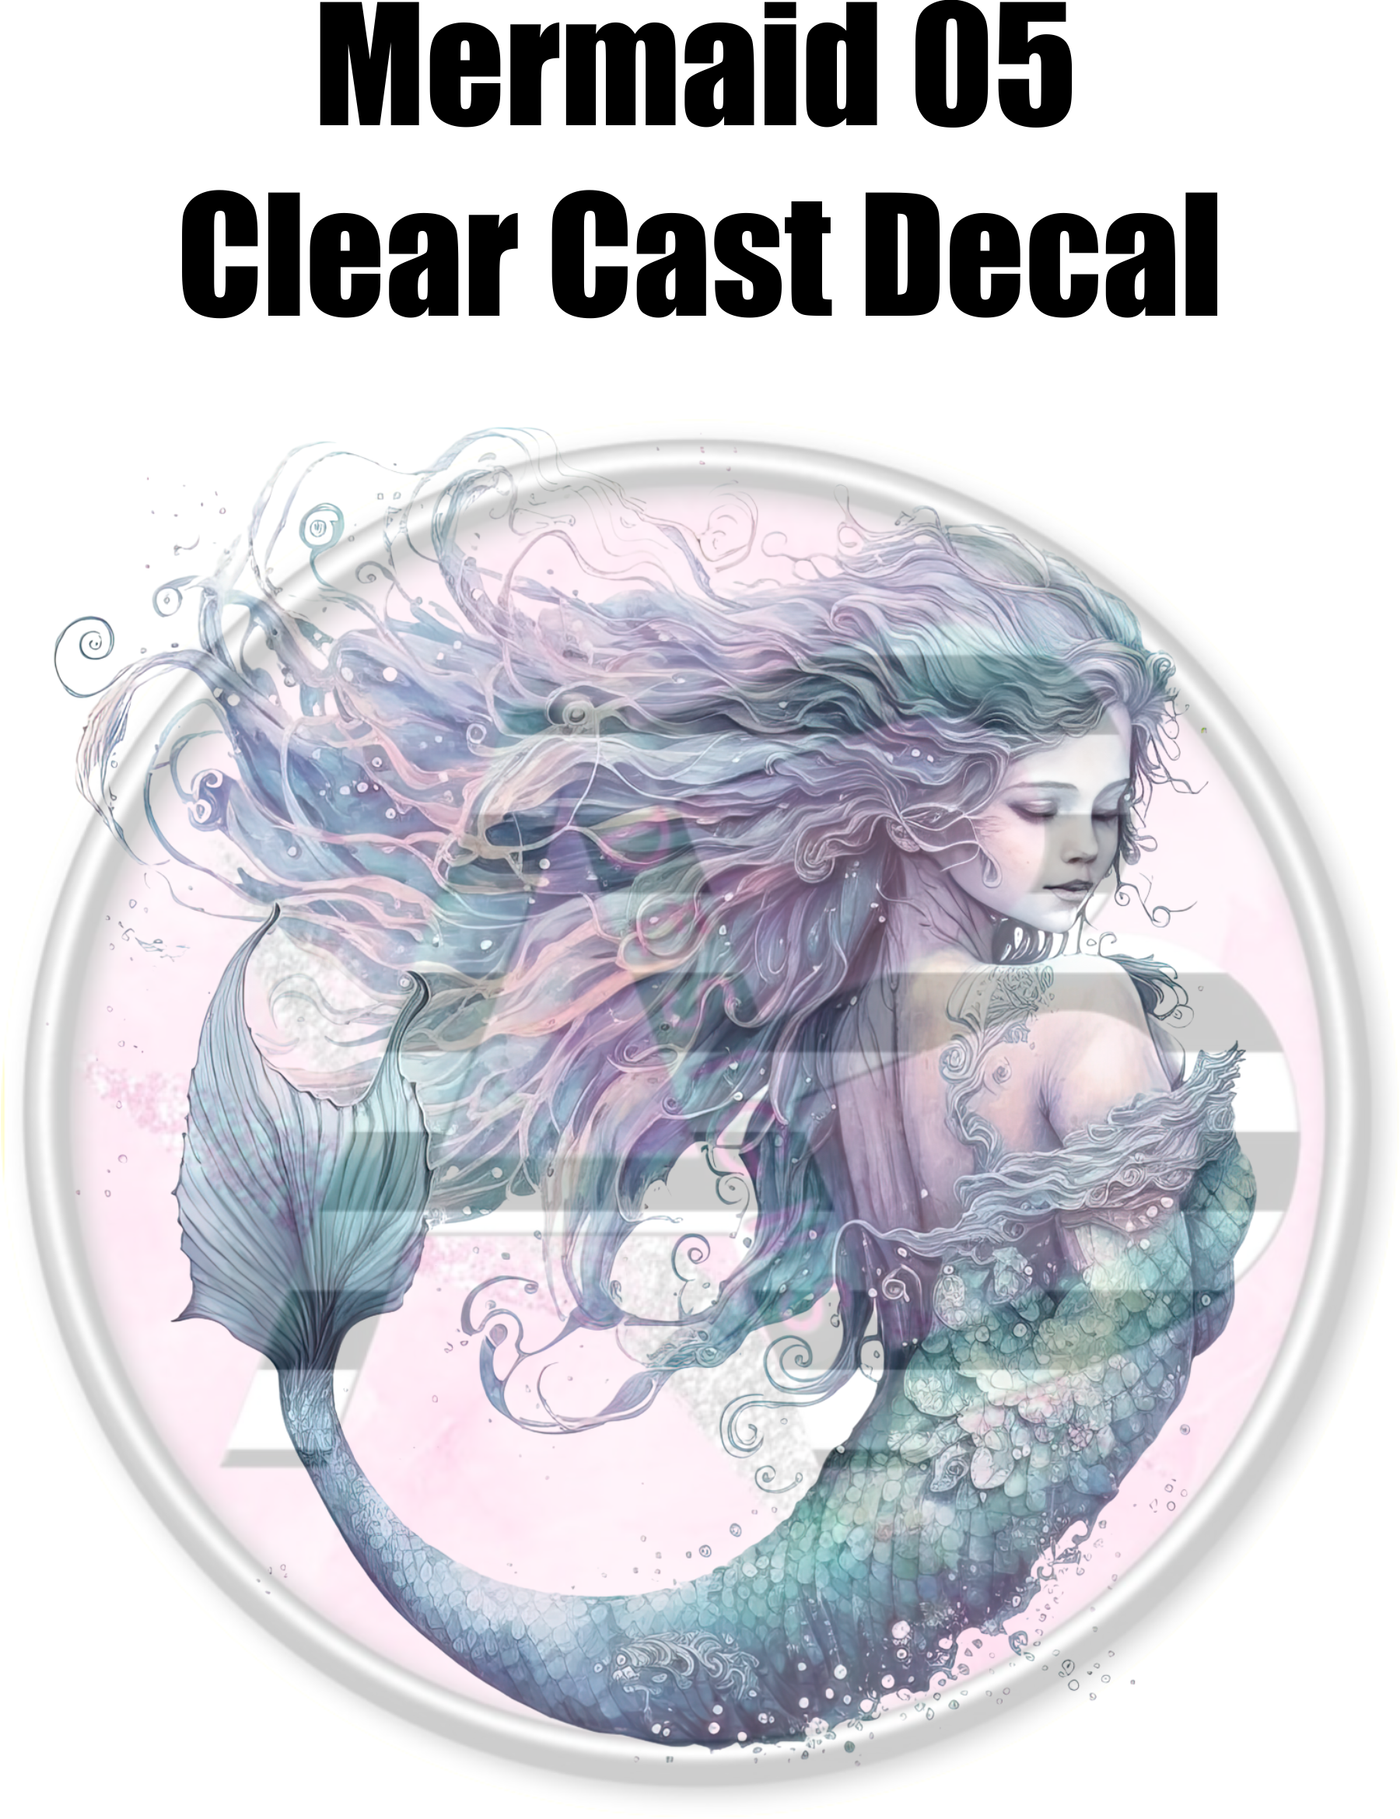 Mermaid 05 - Clear Cast Decal